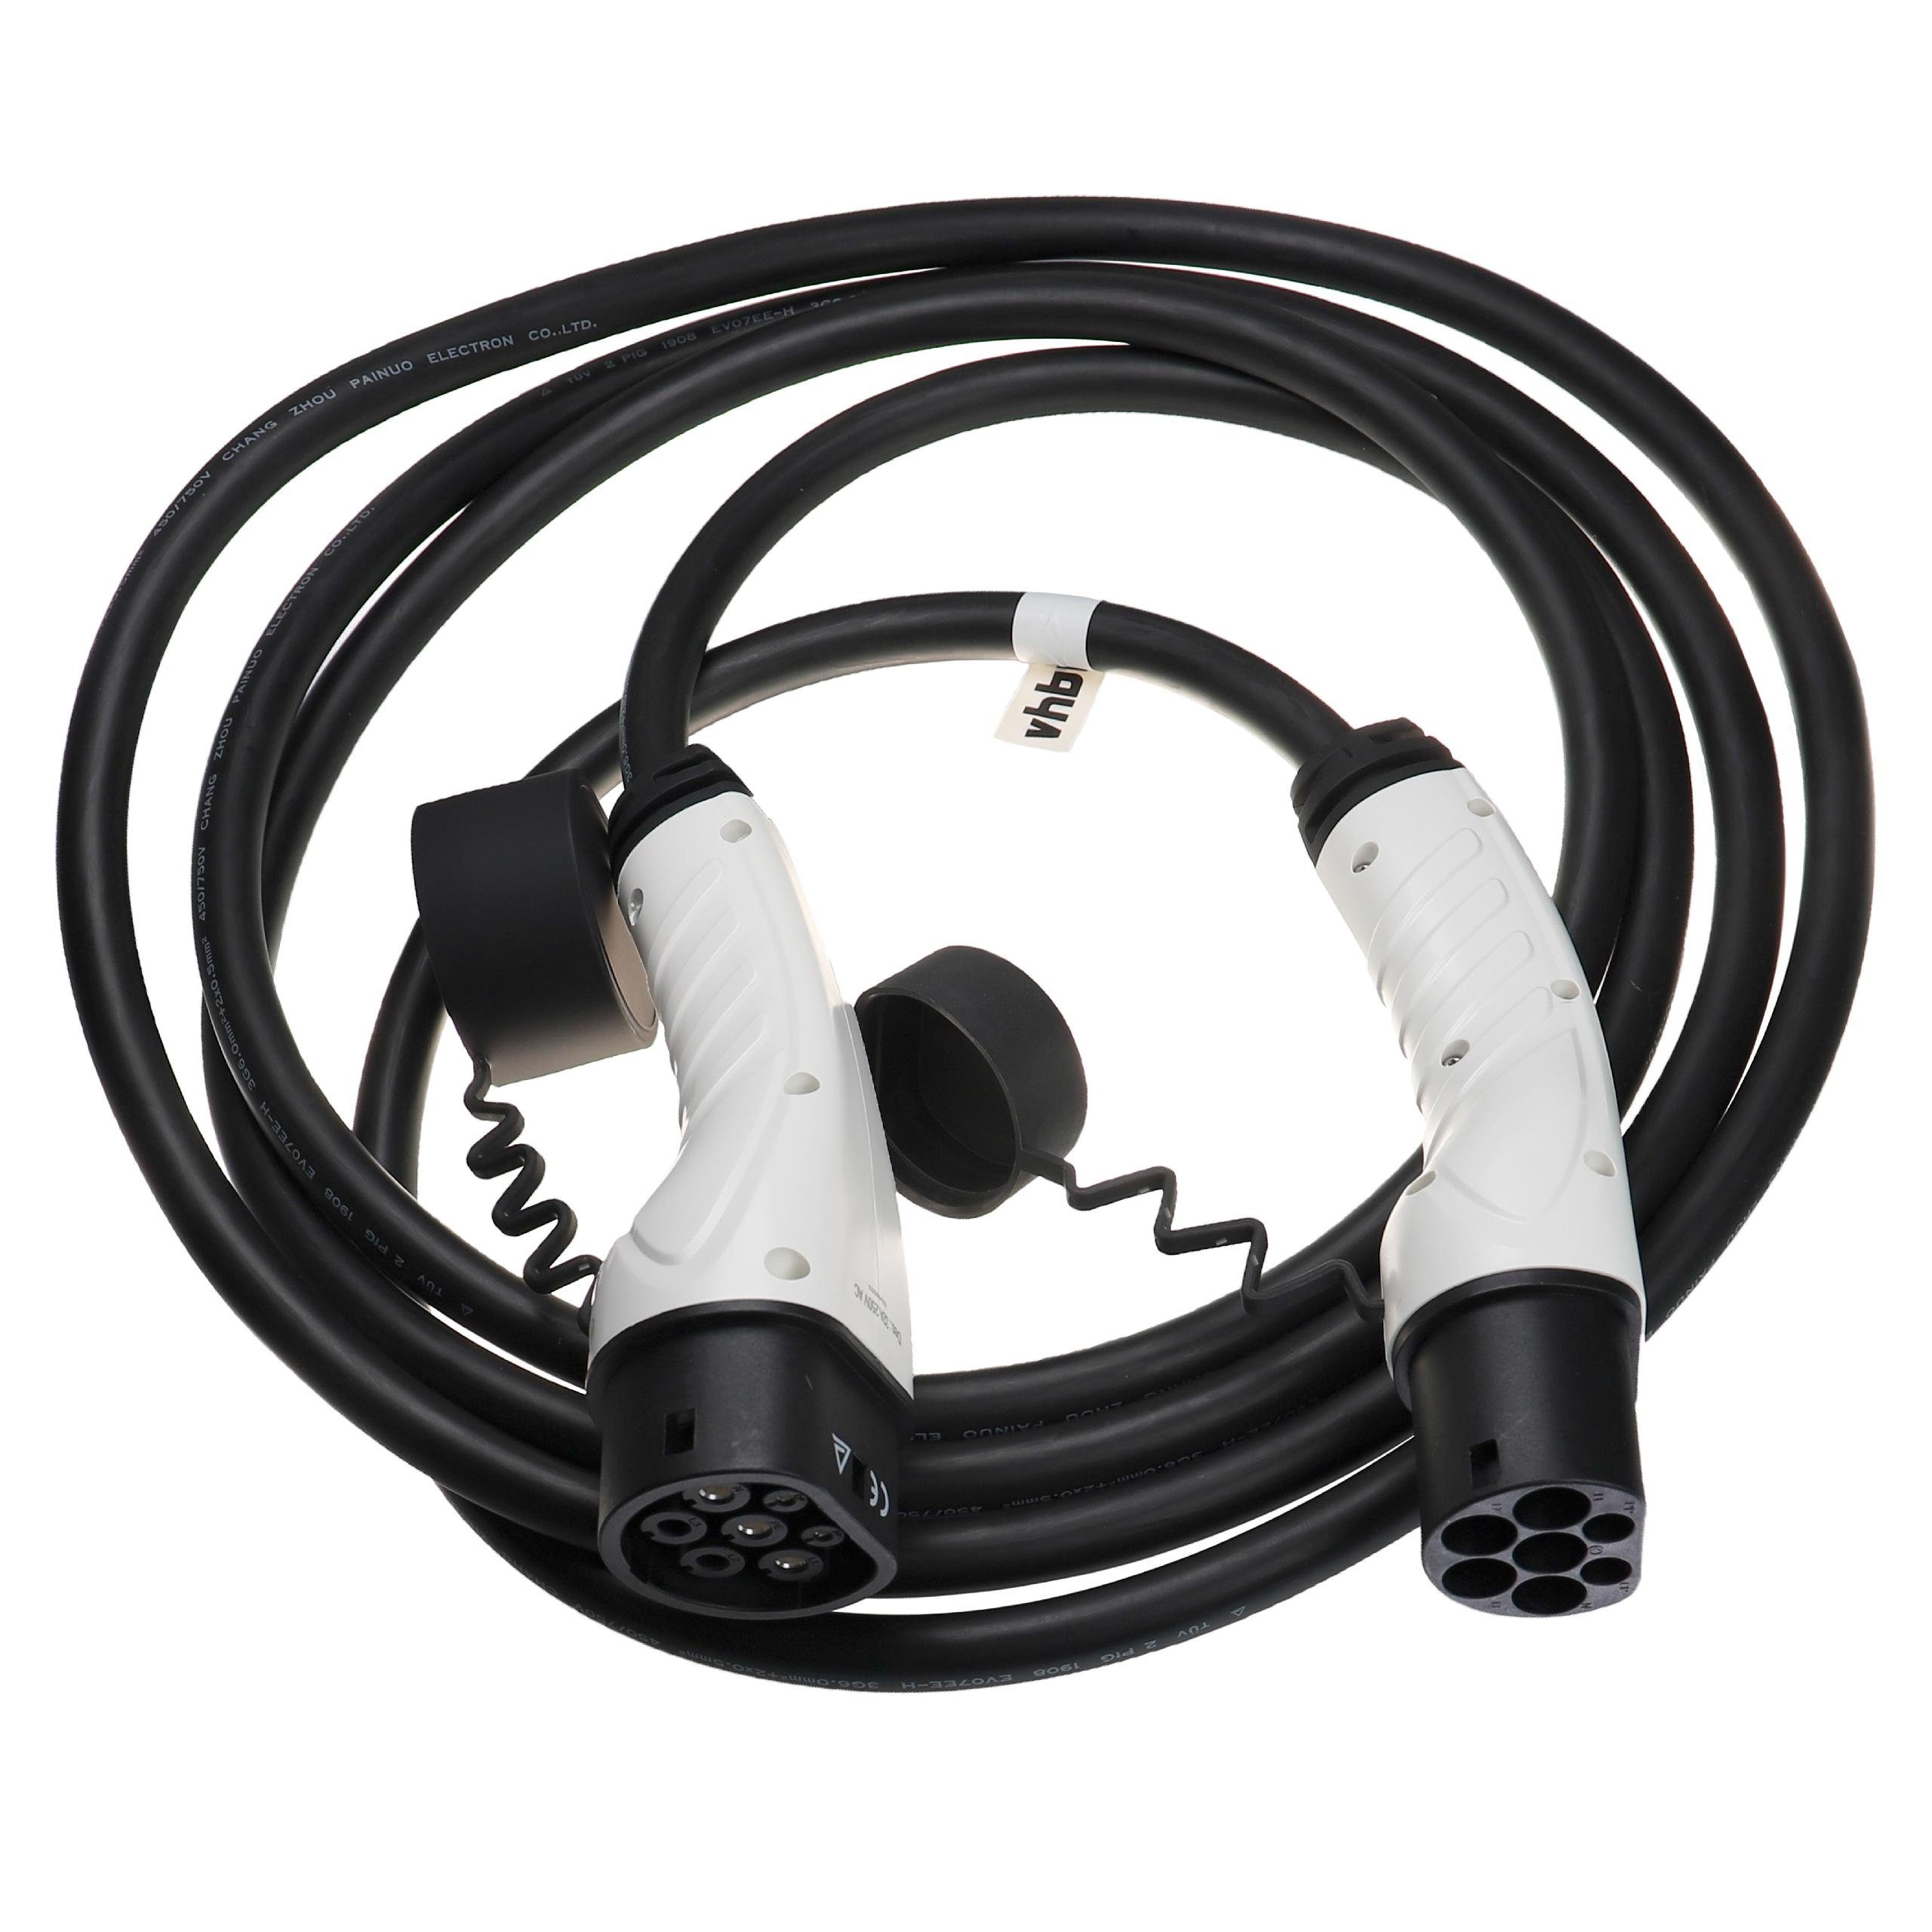 für passend / vhbw Ladekabel Elektroauto MX-30 Plug-in-Hybrid Elektro-Kabel Mazda